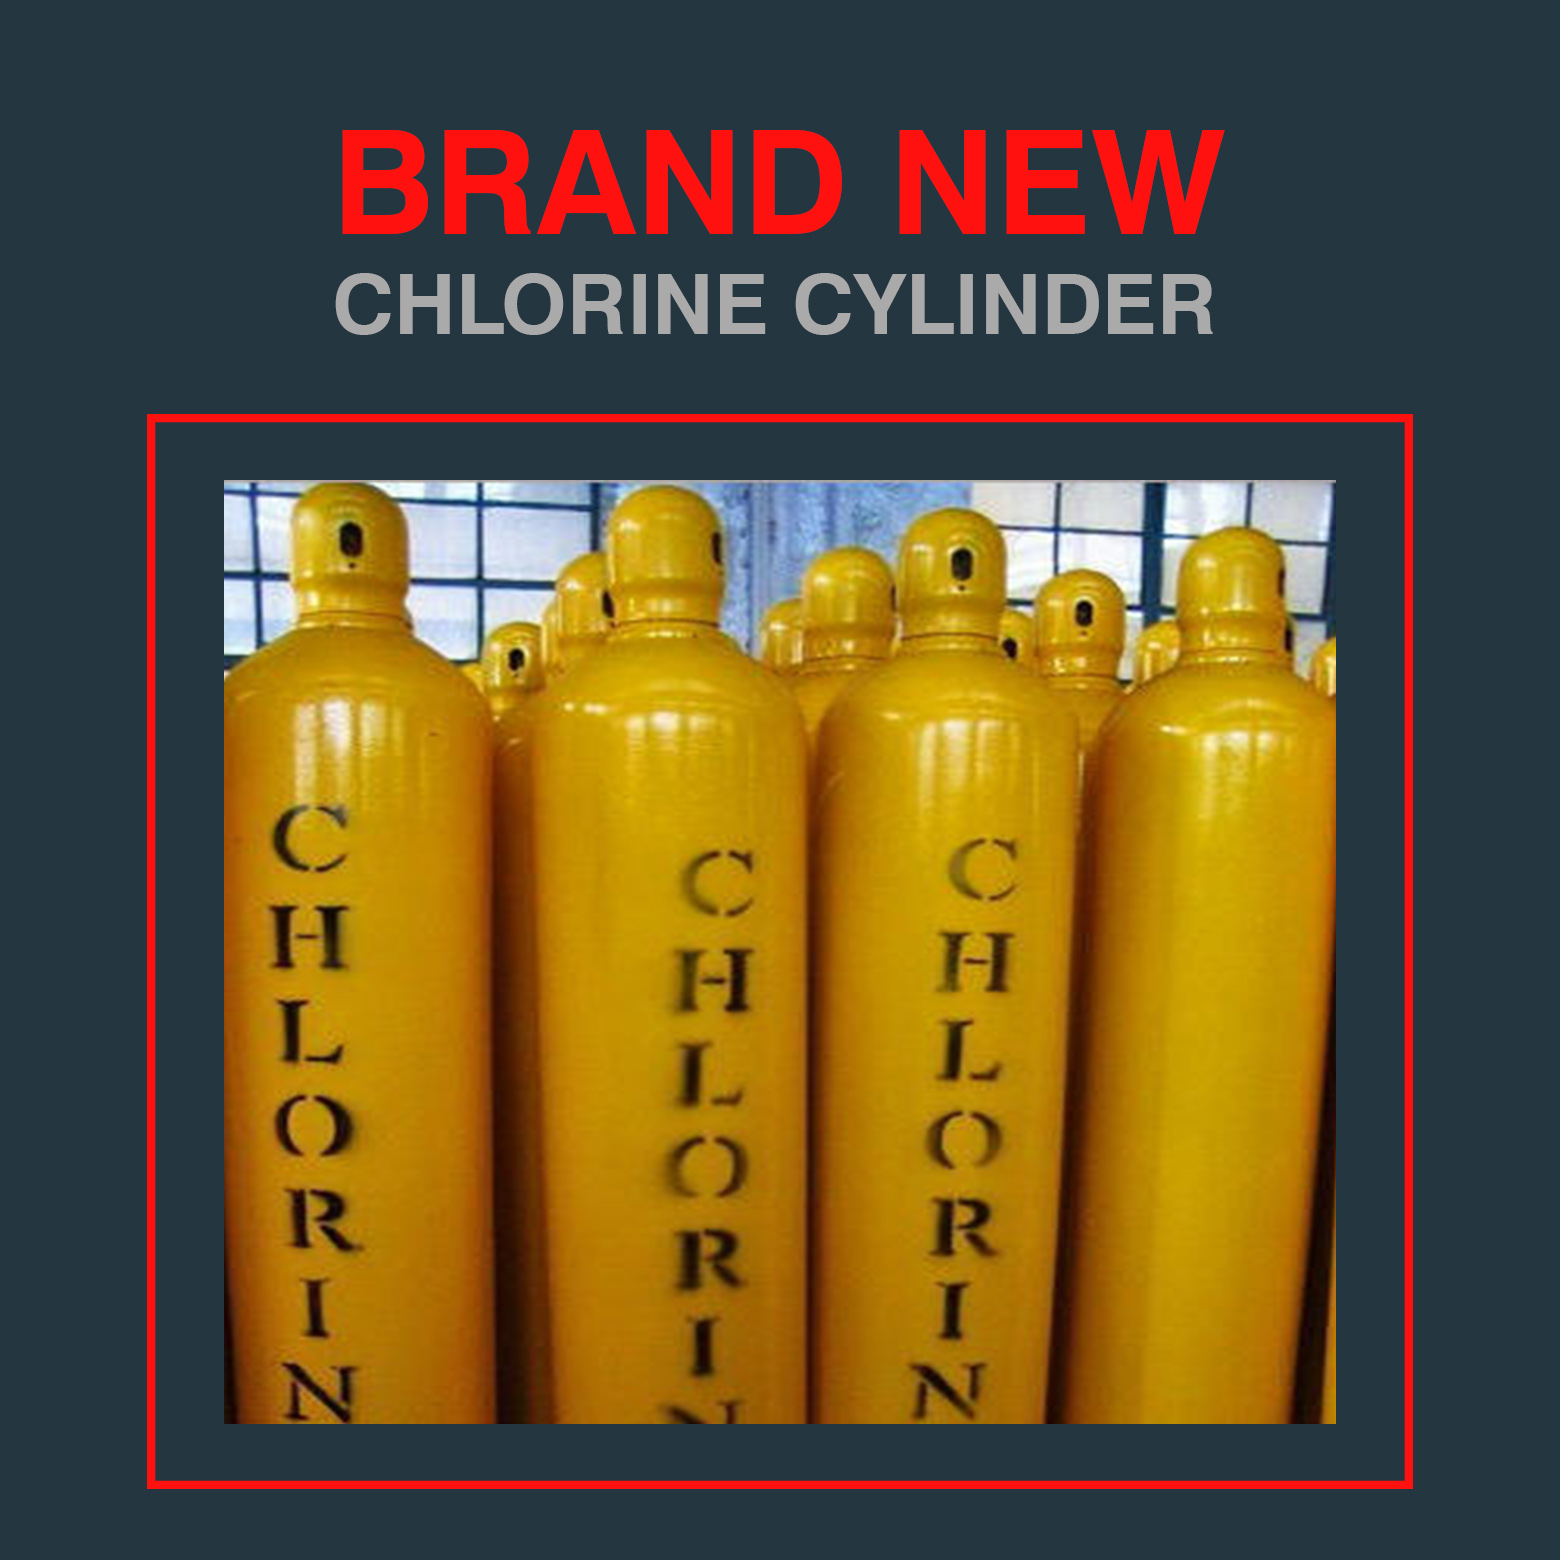 Brand New Chlorine Cylinders In Spain